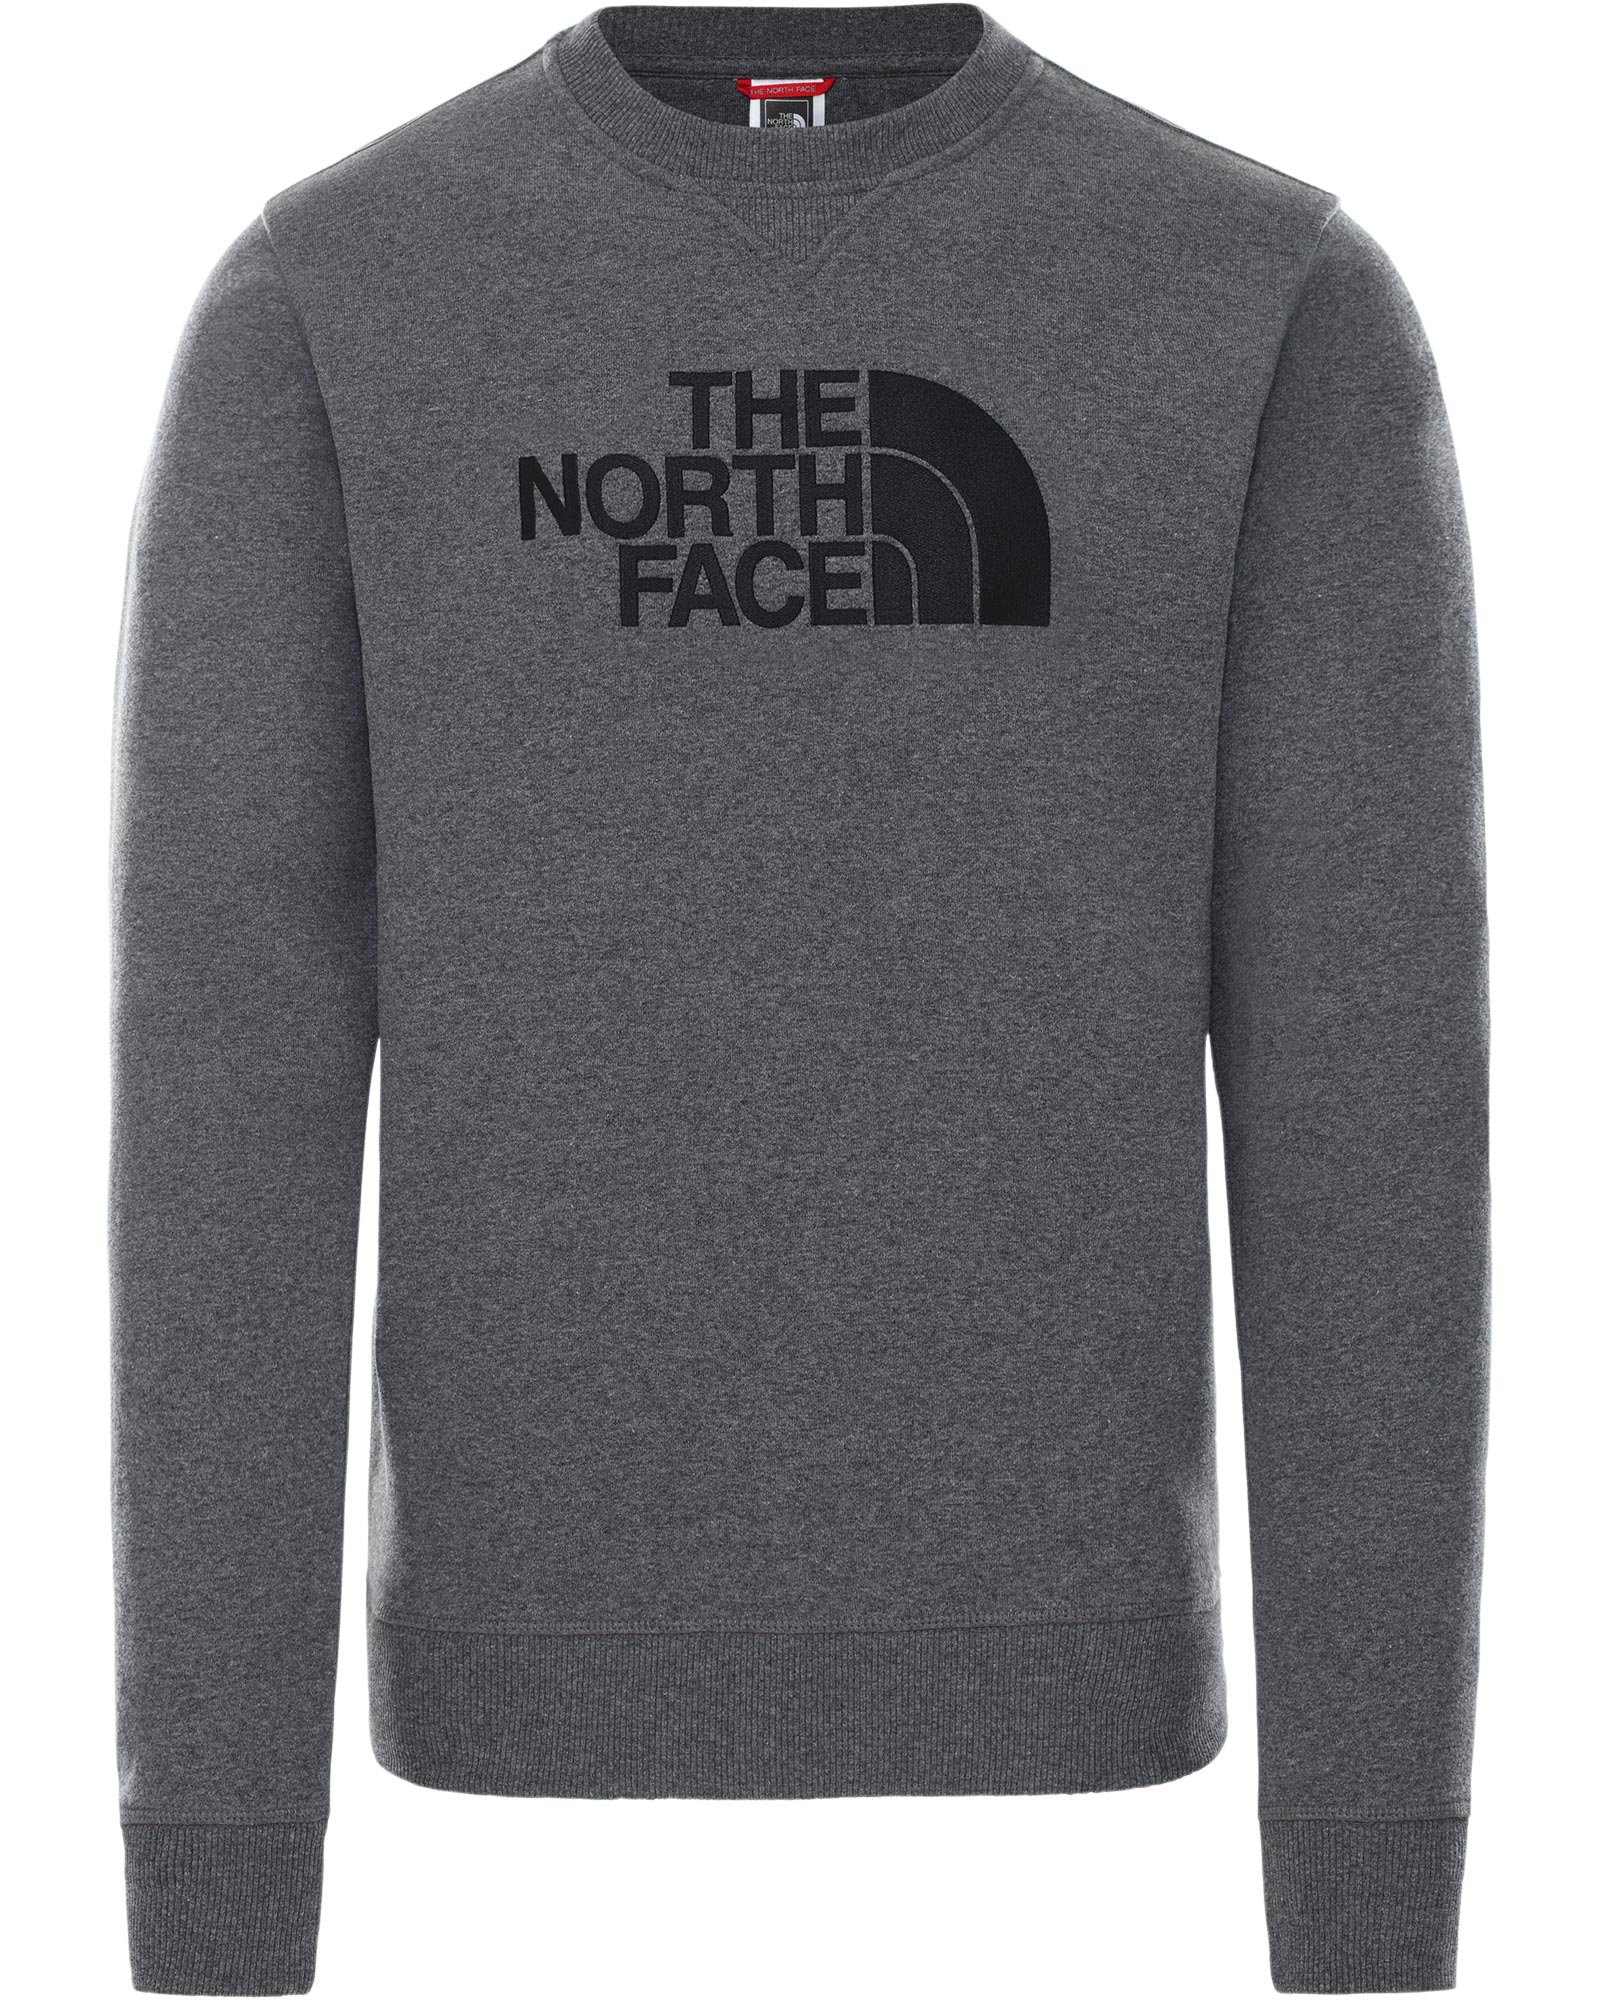 The North Face Drew Peak Men’s Crew - TNF Medium Grey Heather XL